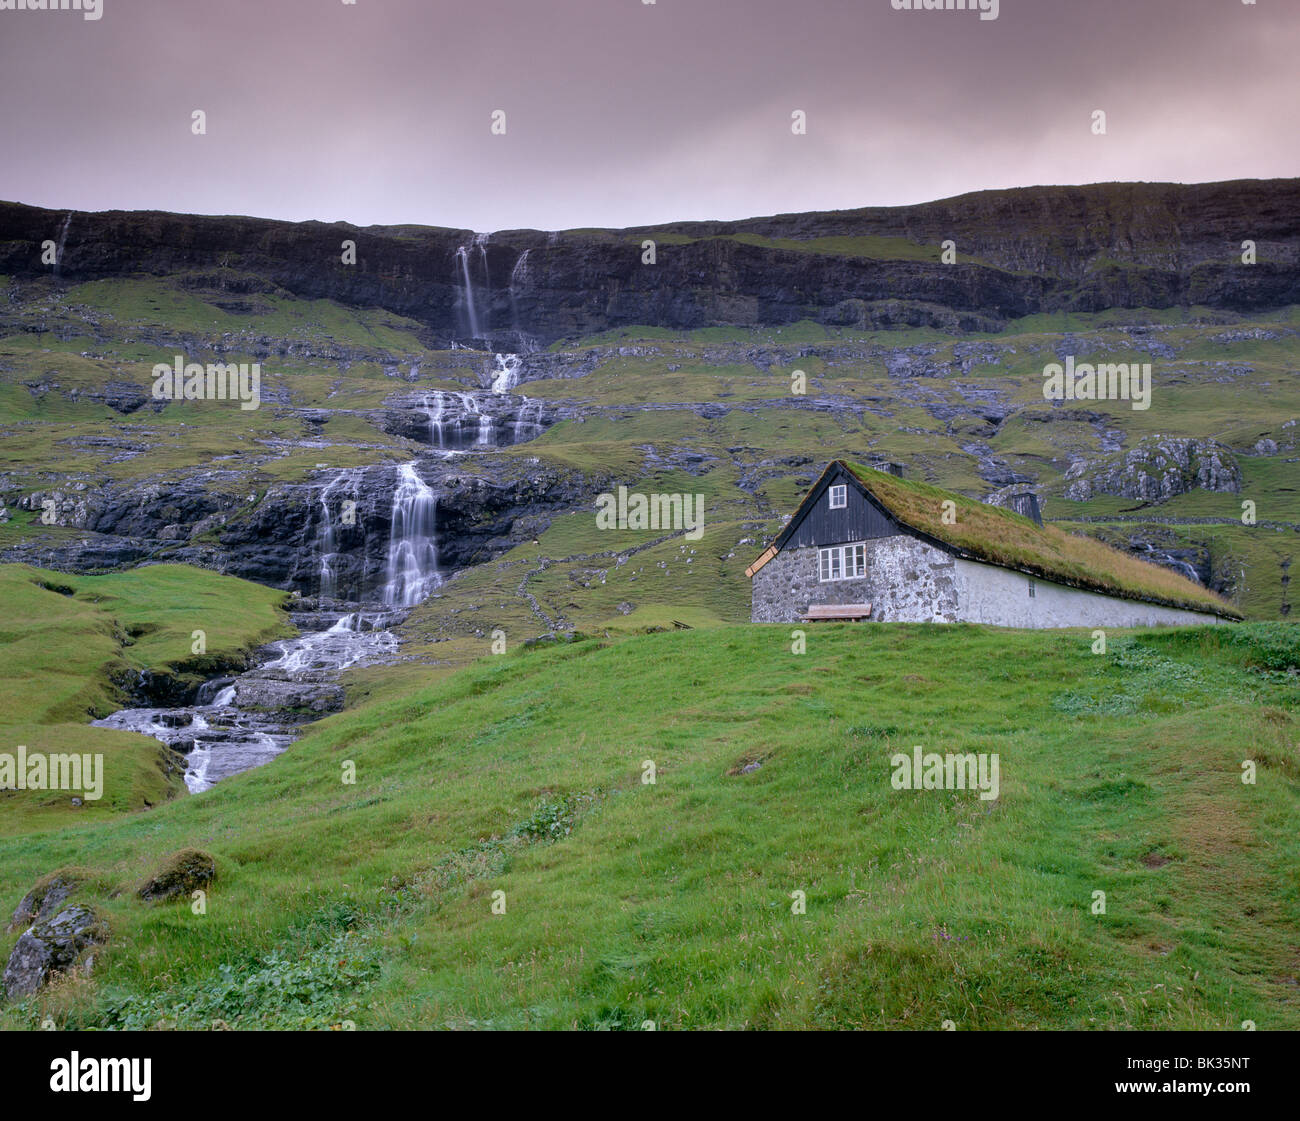 Traditionellen Rasen überdachten Hof Gebäude und Wasserfall, Saksun, Streymoy Island, Färöer Inseln (Färöer), Dänemark, Europa Stockfoto